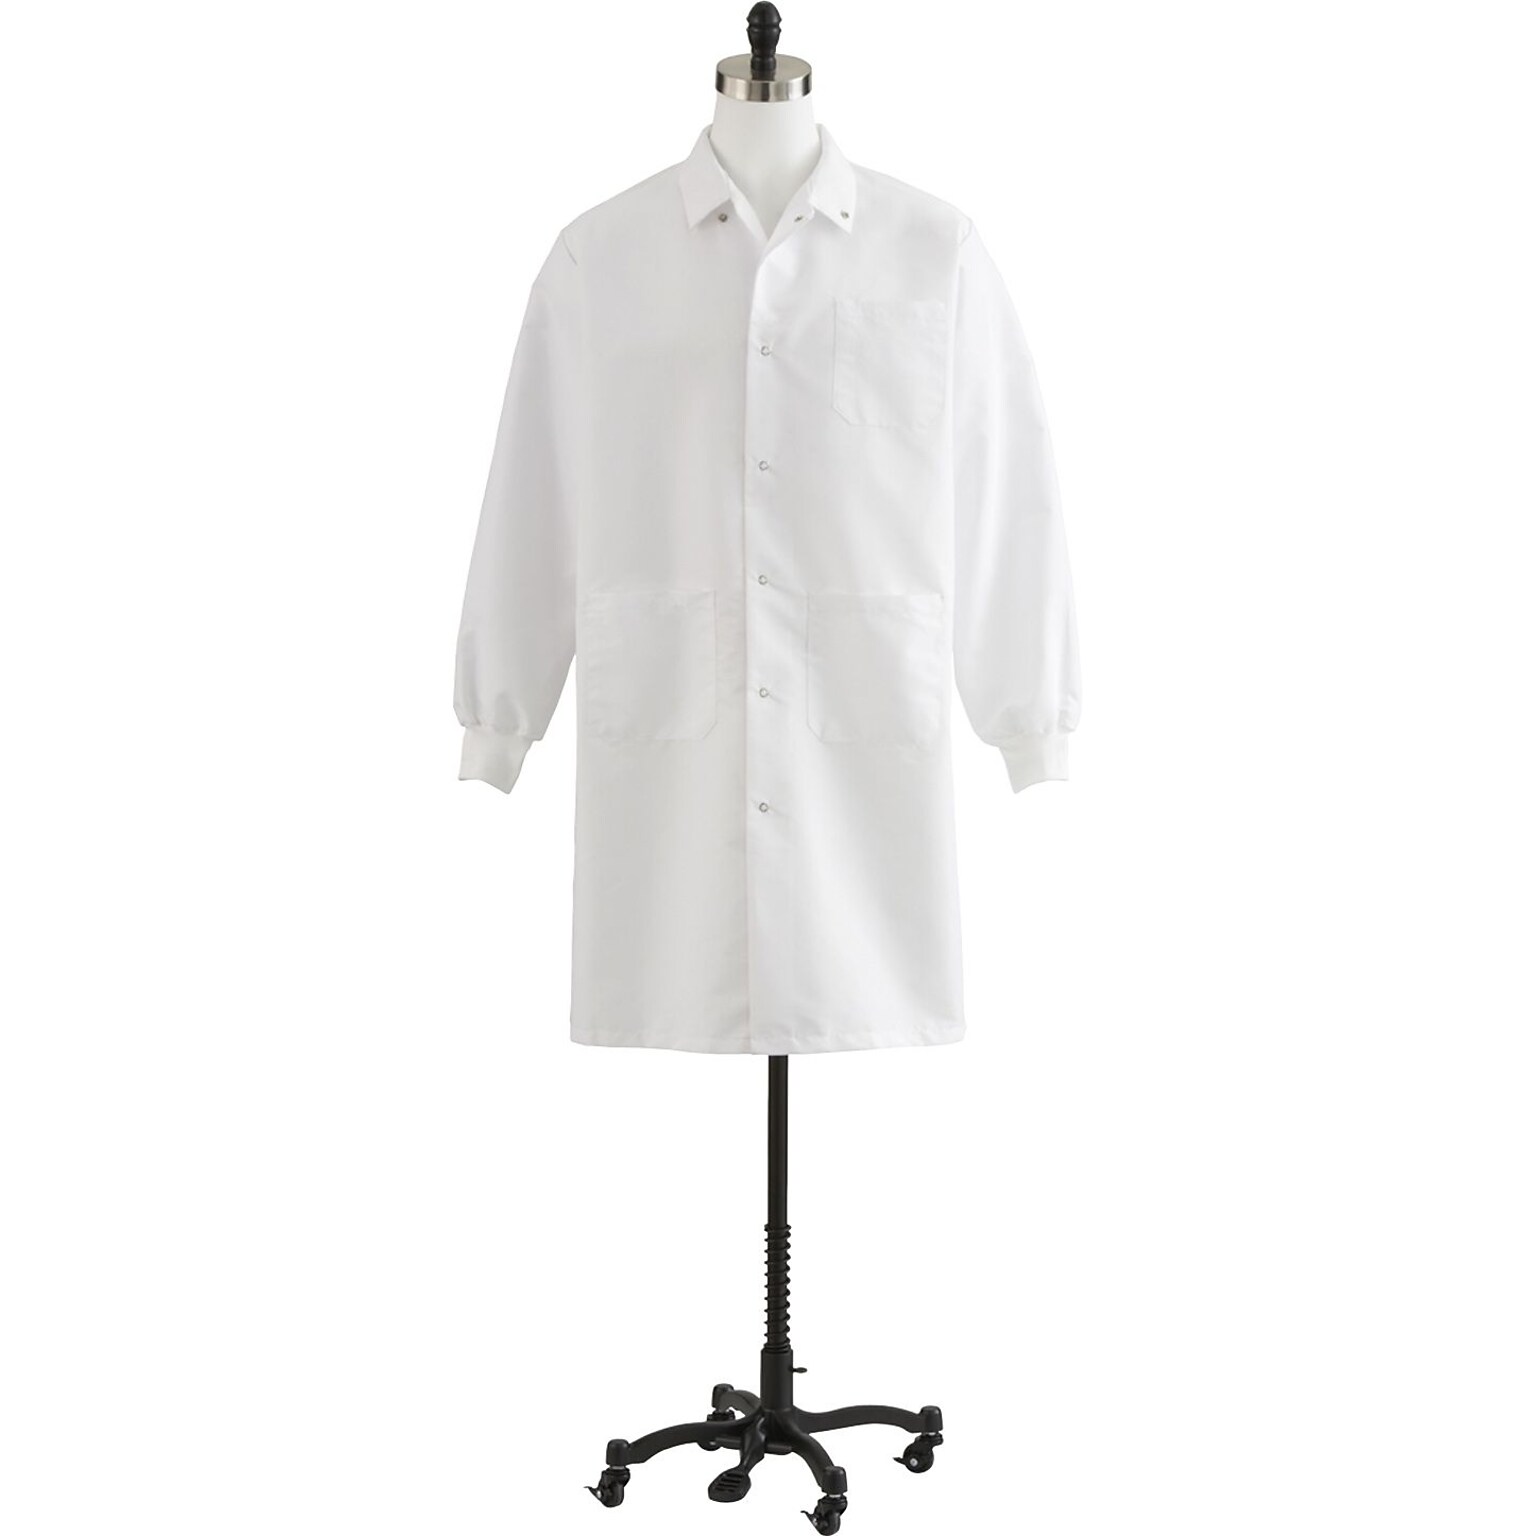 Medline Unisex Knee Length Knit Cuff Lab Coats, White, XL